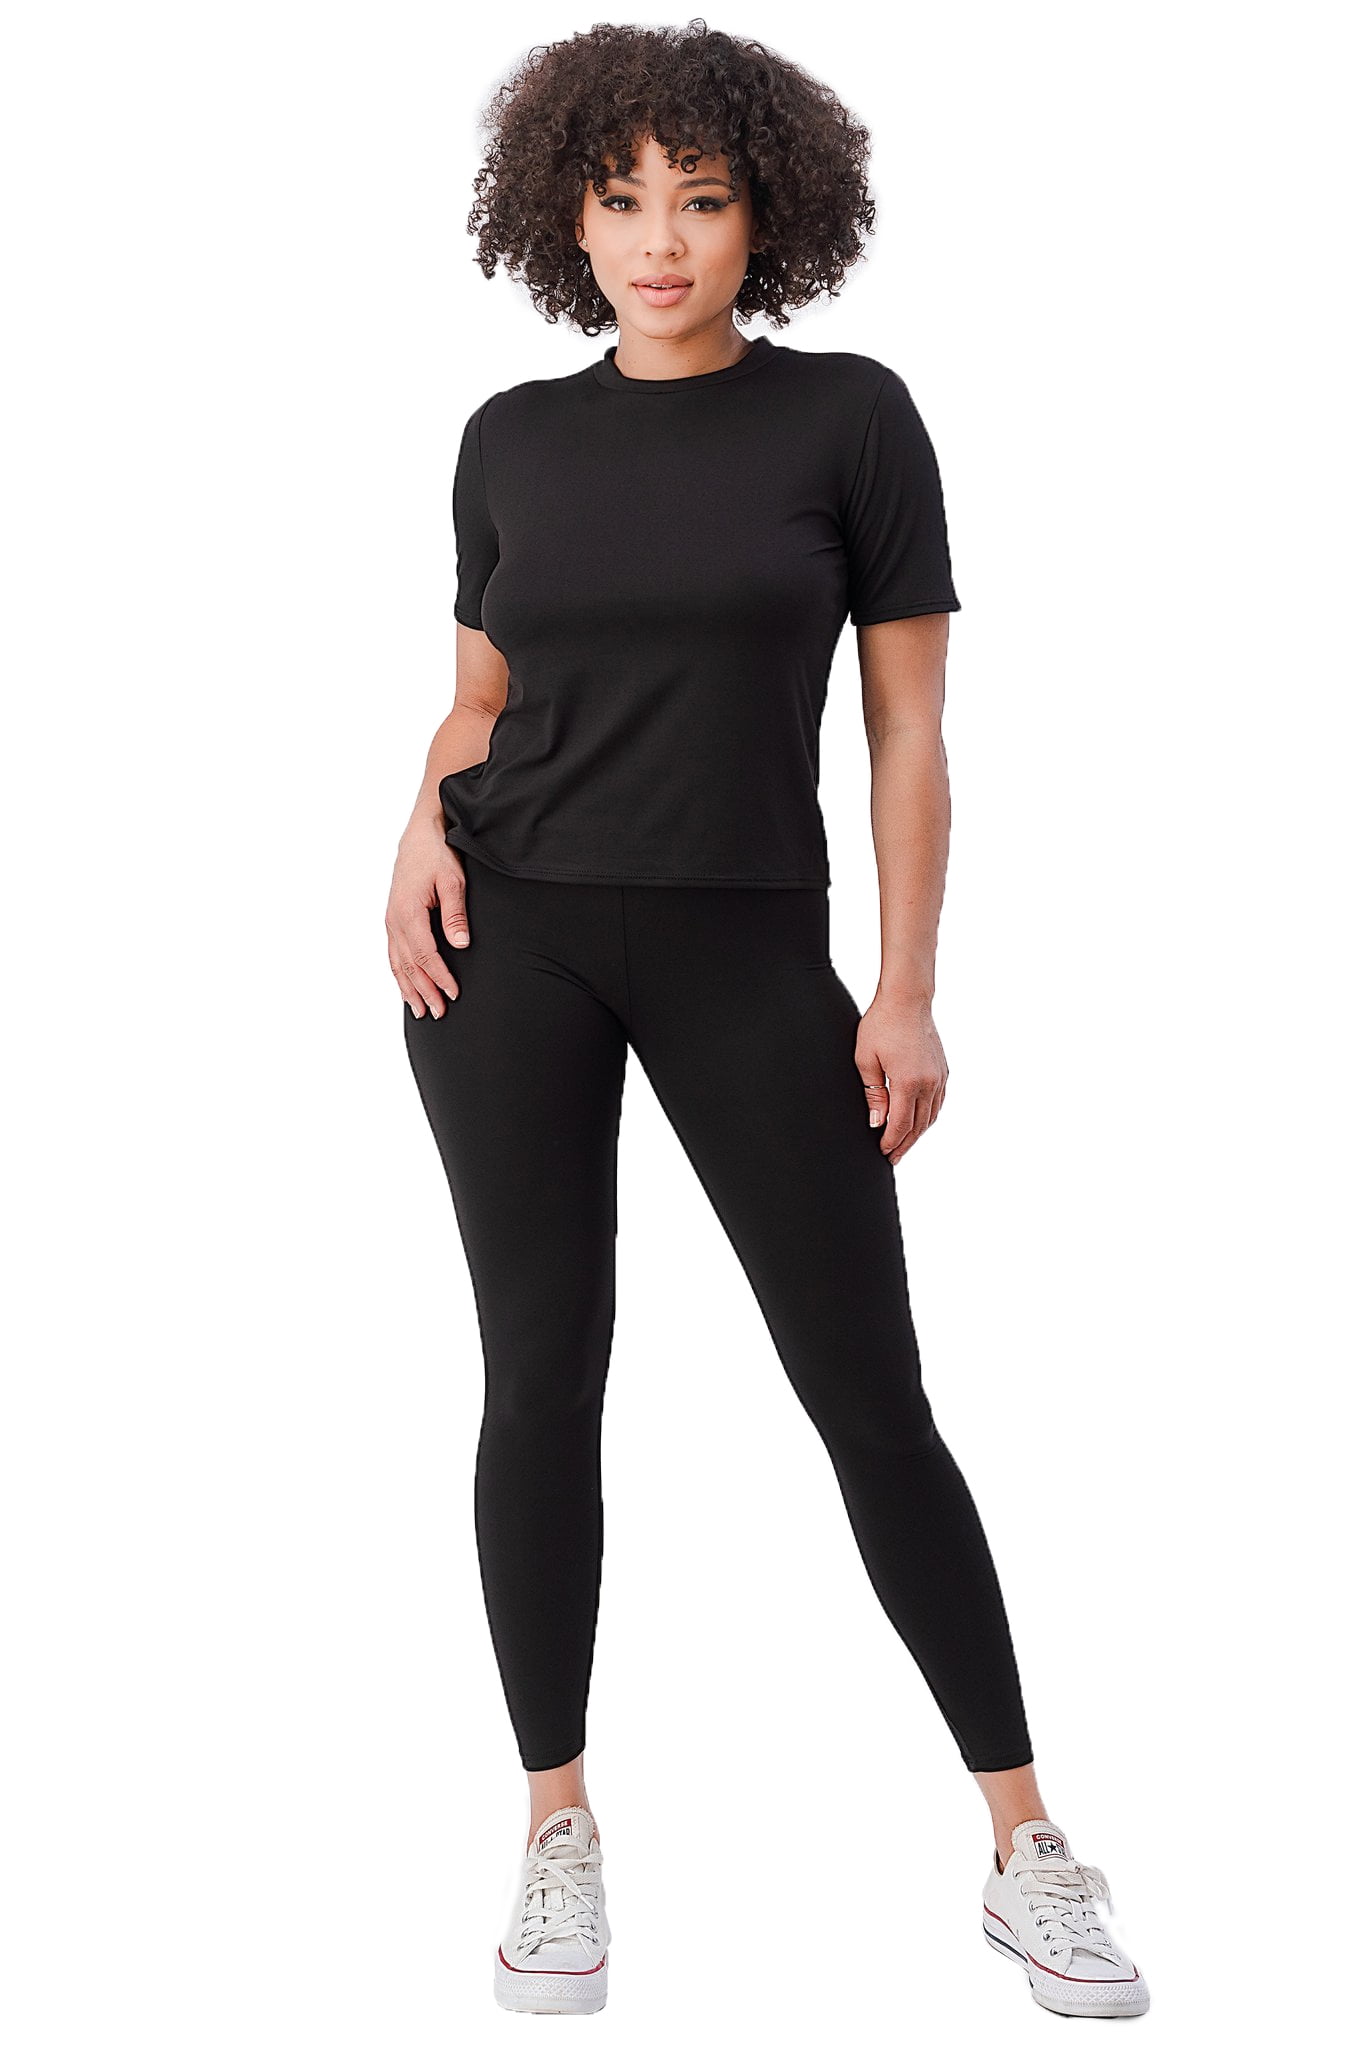 Women Full Length Solid T-Shirt Set With Leggings Black Medium Black Medium